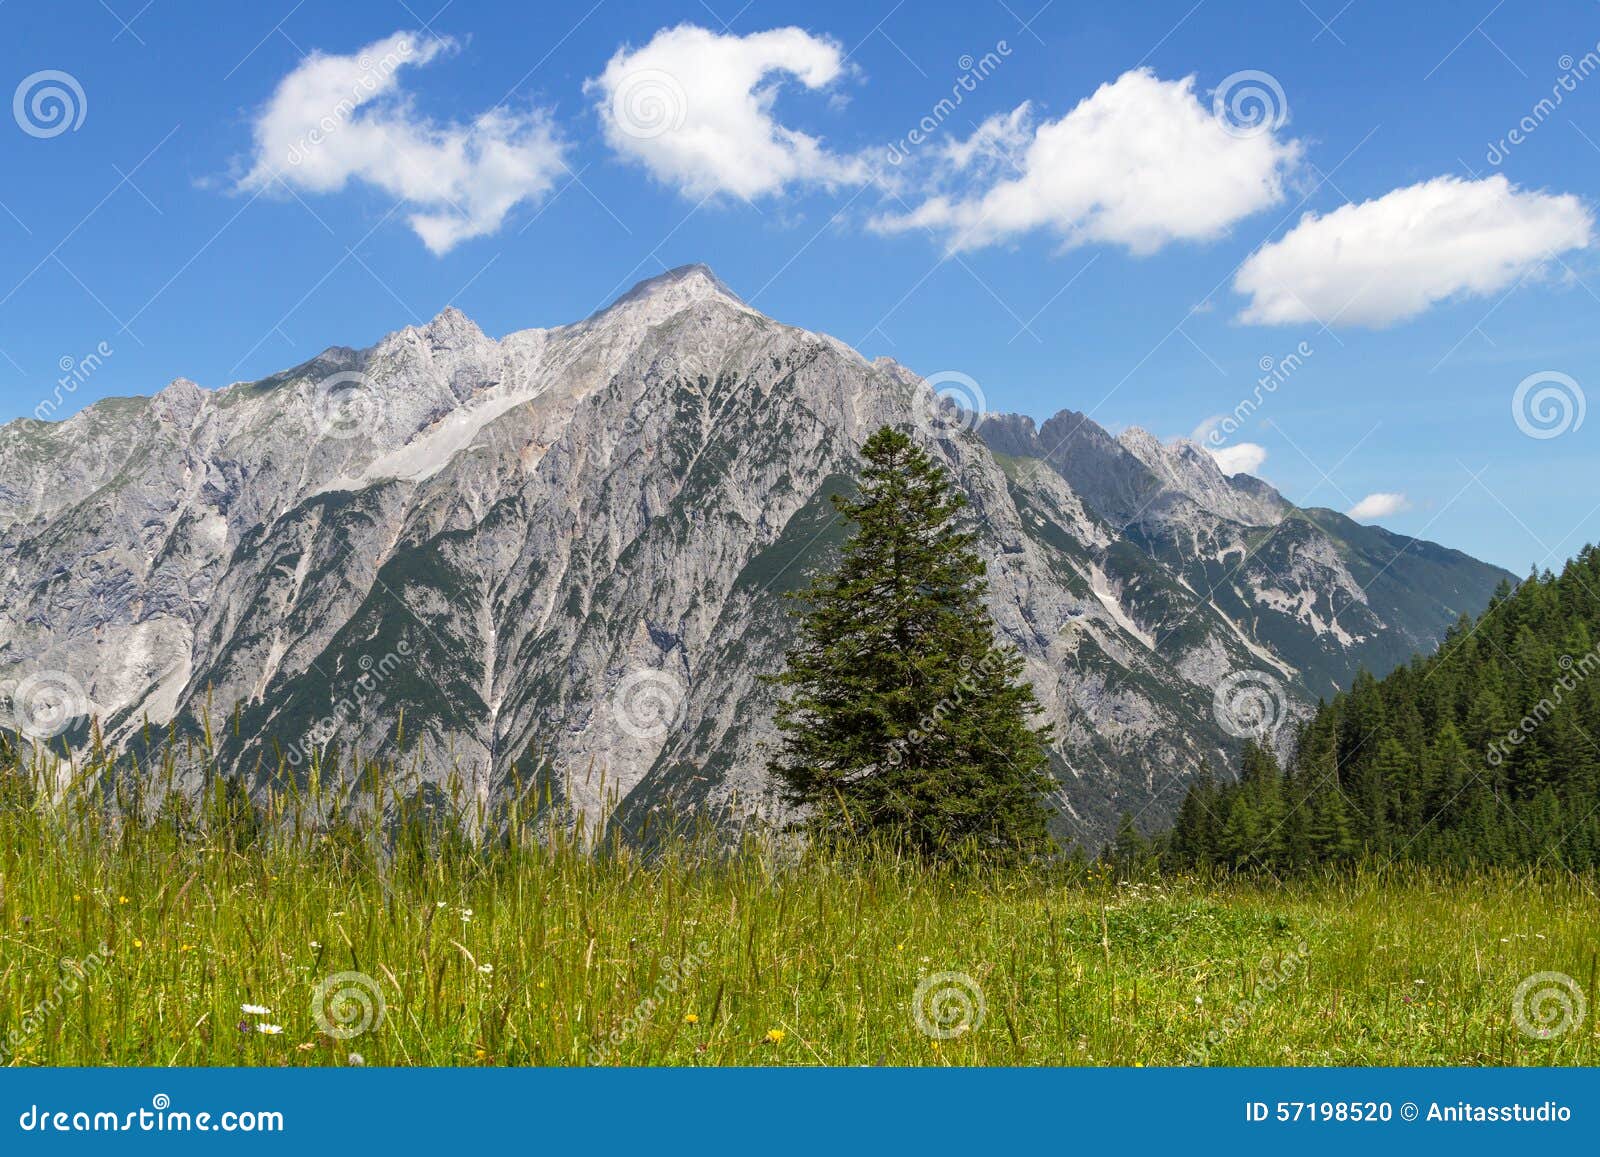 alpine meadow with mountain range in background. austria, tiro